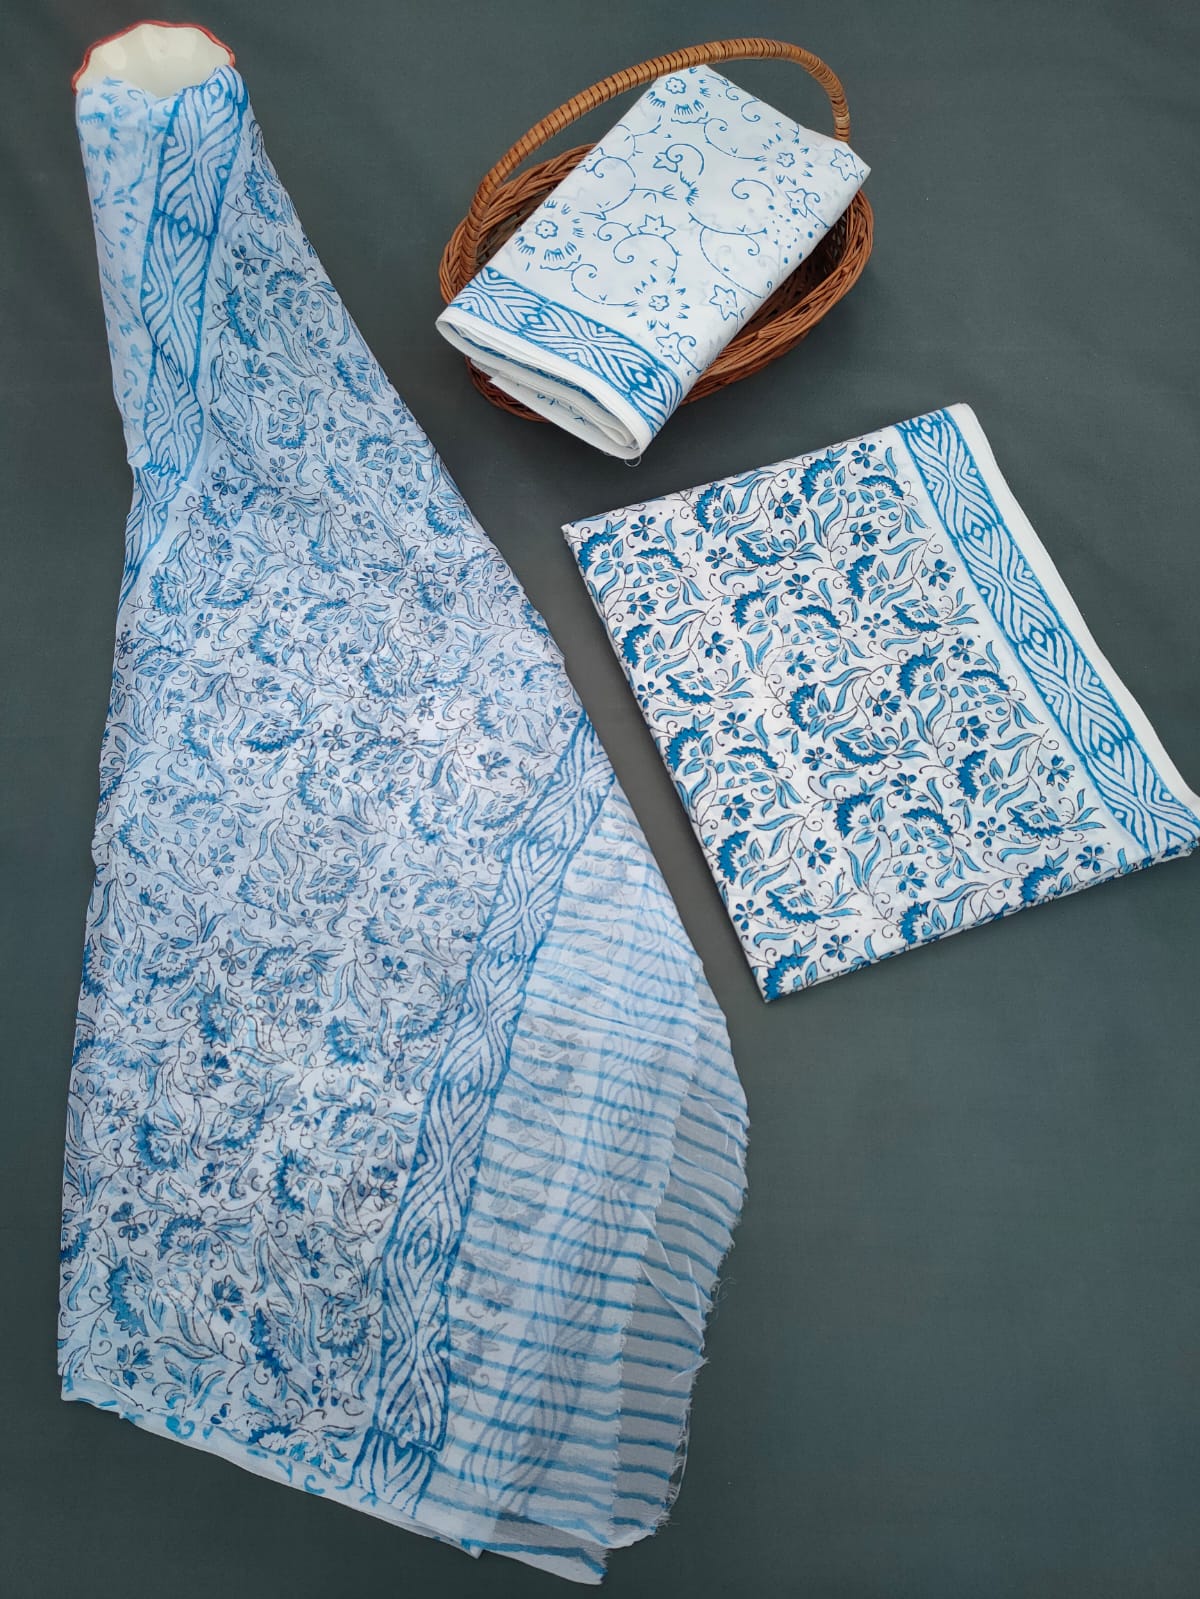 Jaipuri Unstitched Dress Material Hand Block Printed Cotton Suit With Chiffon Dupatta - JB642